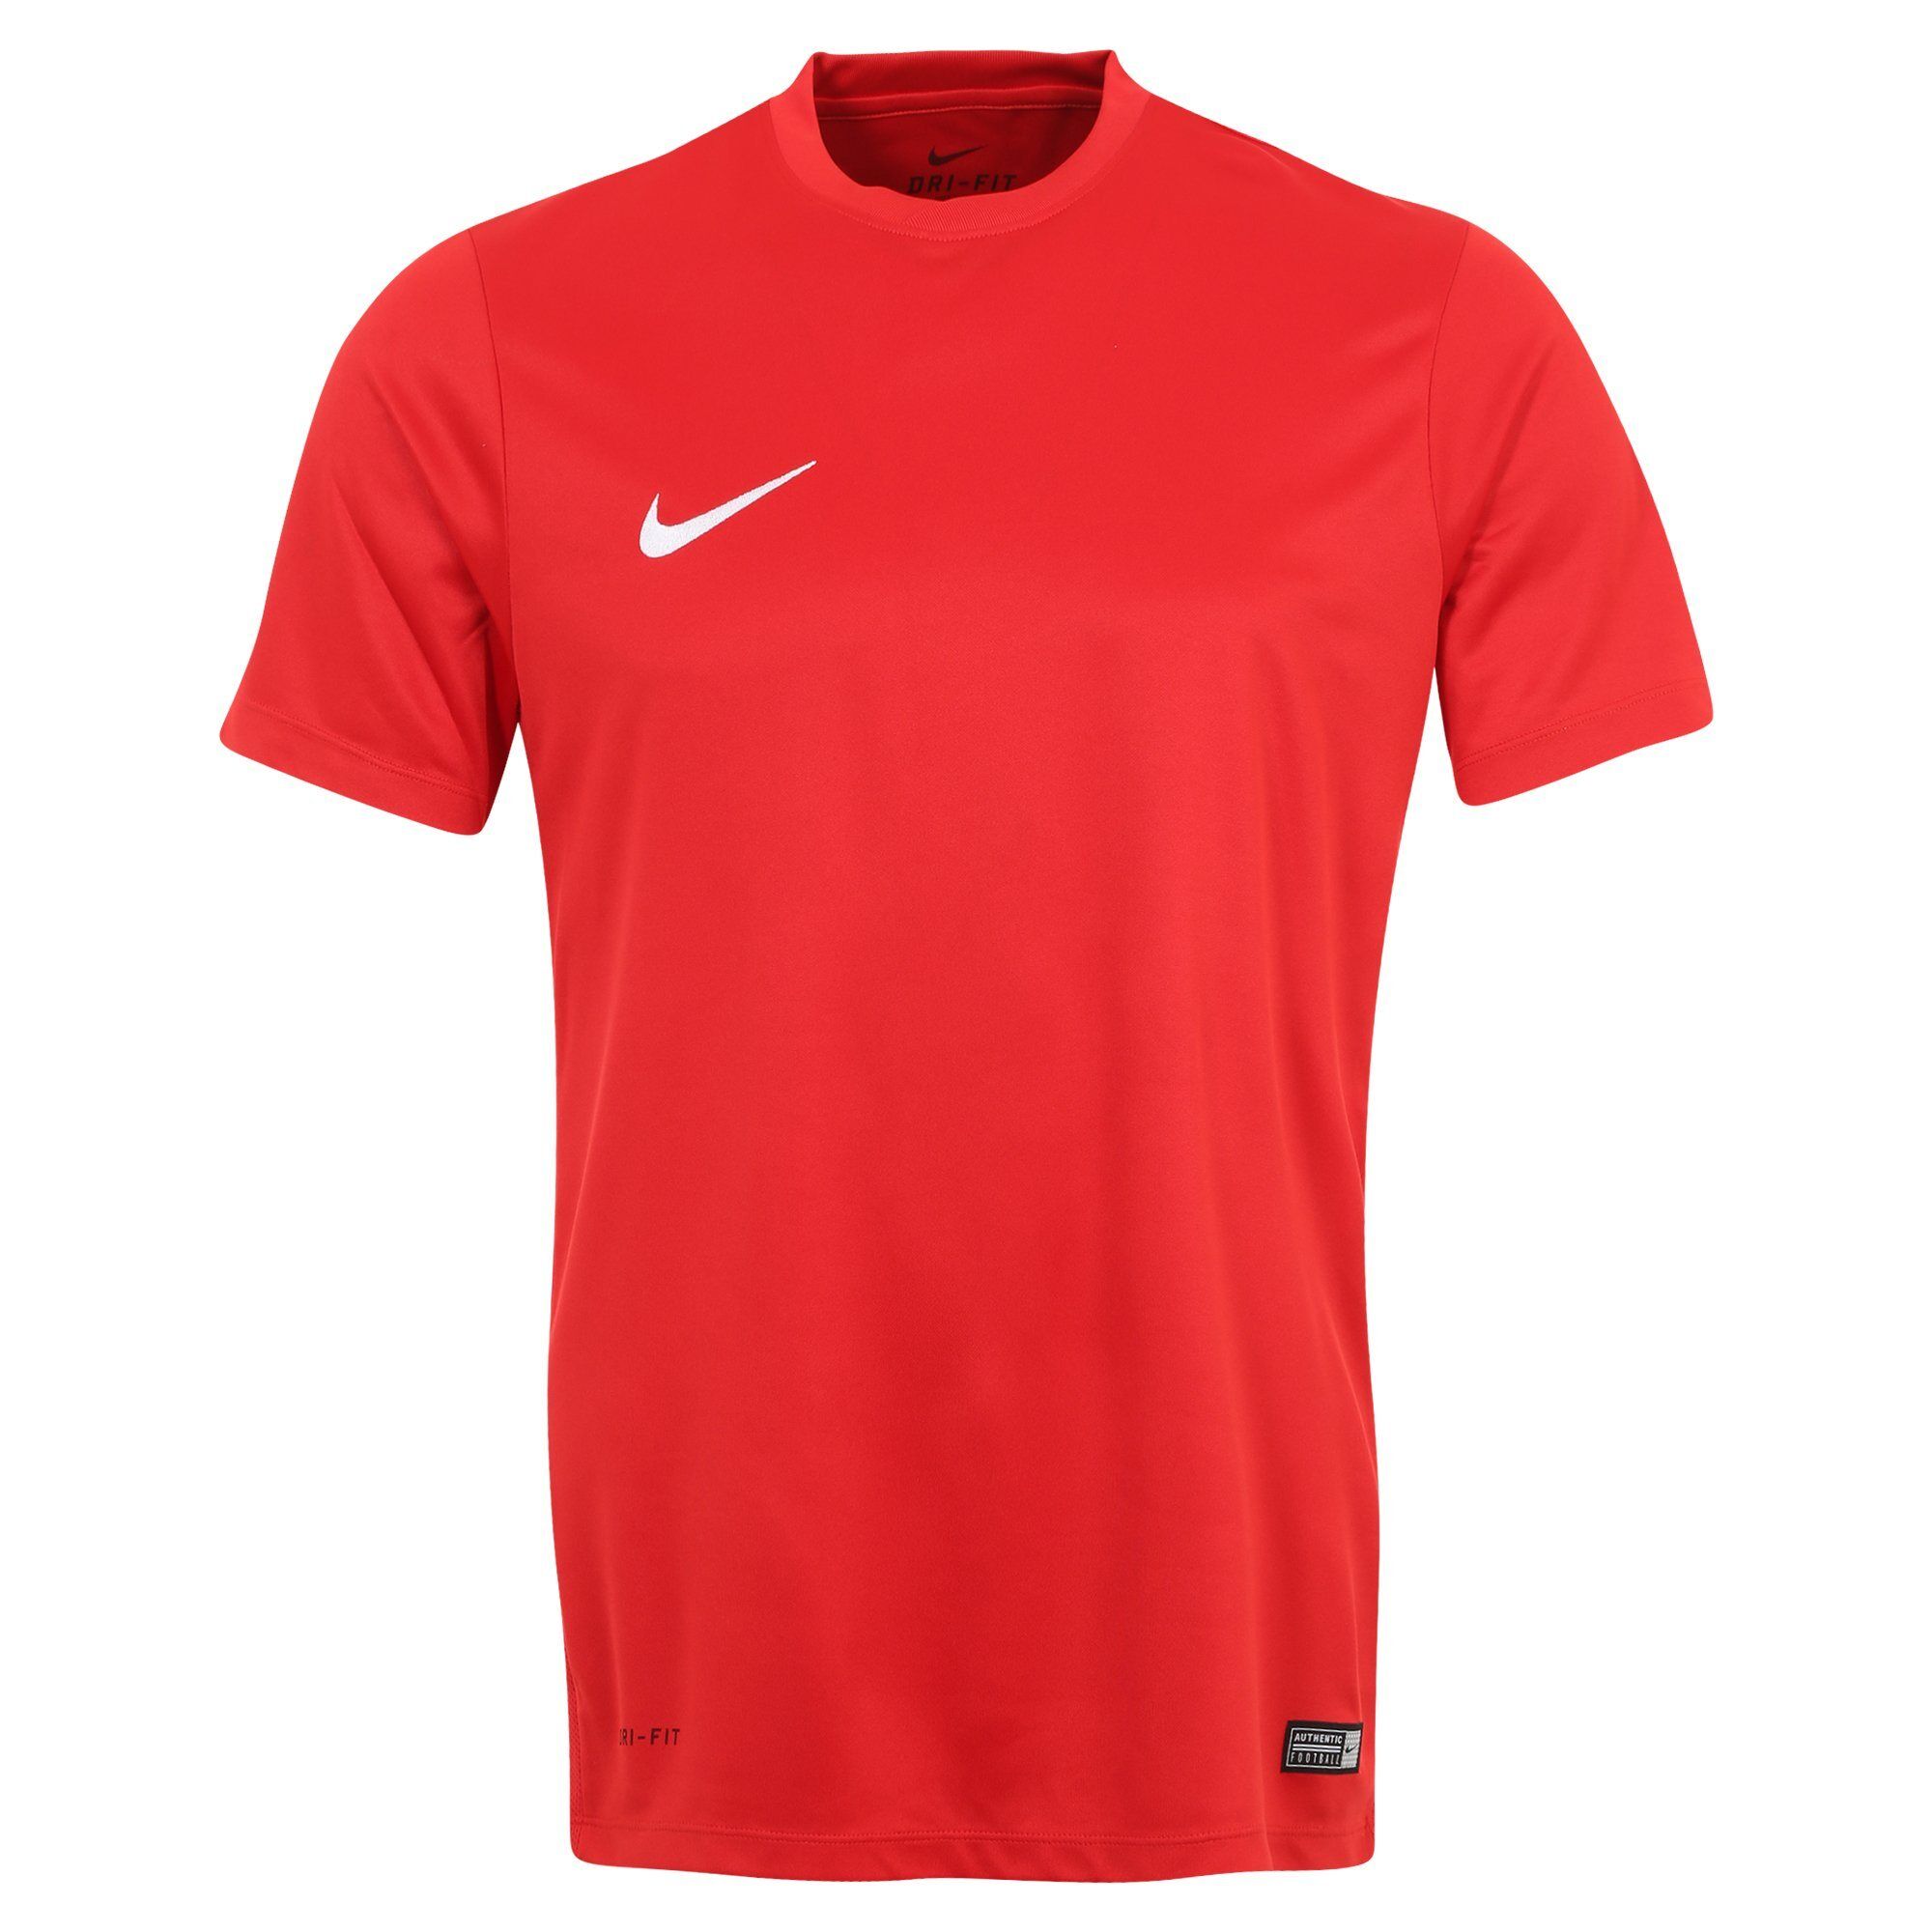 Nike Trikot »Park Vi«, rot-weiß